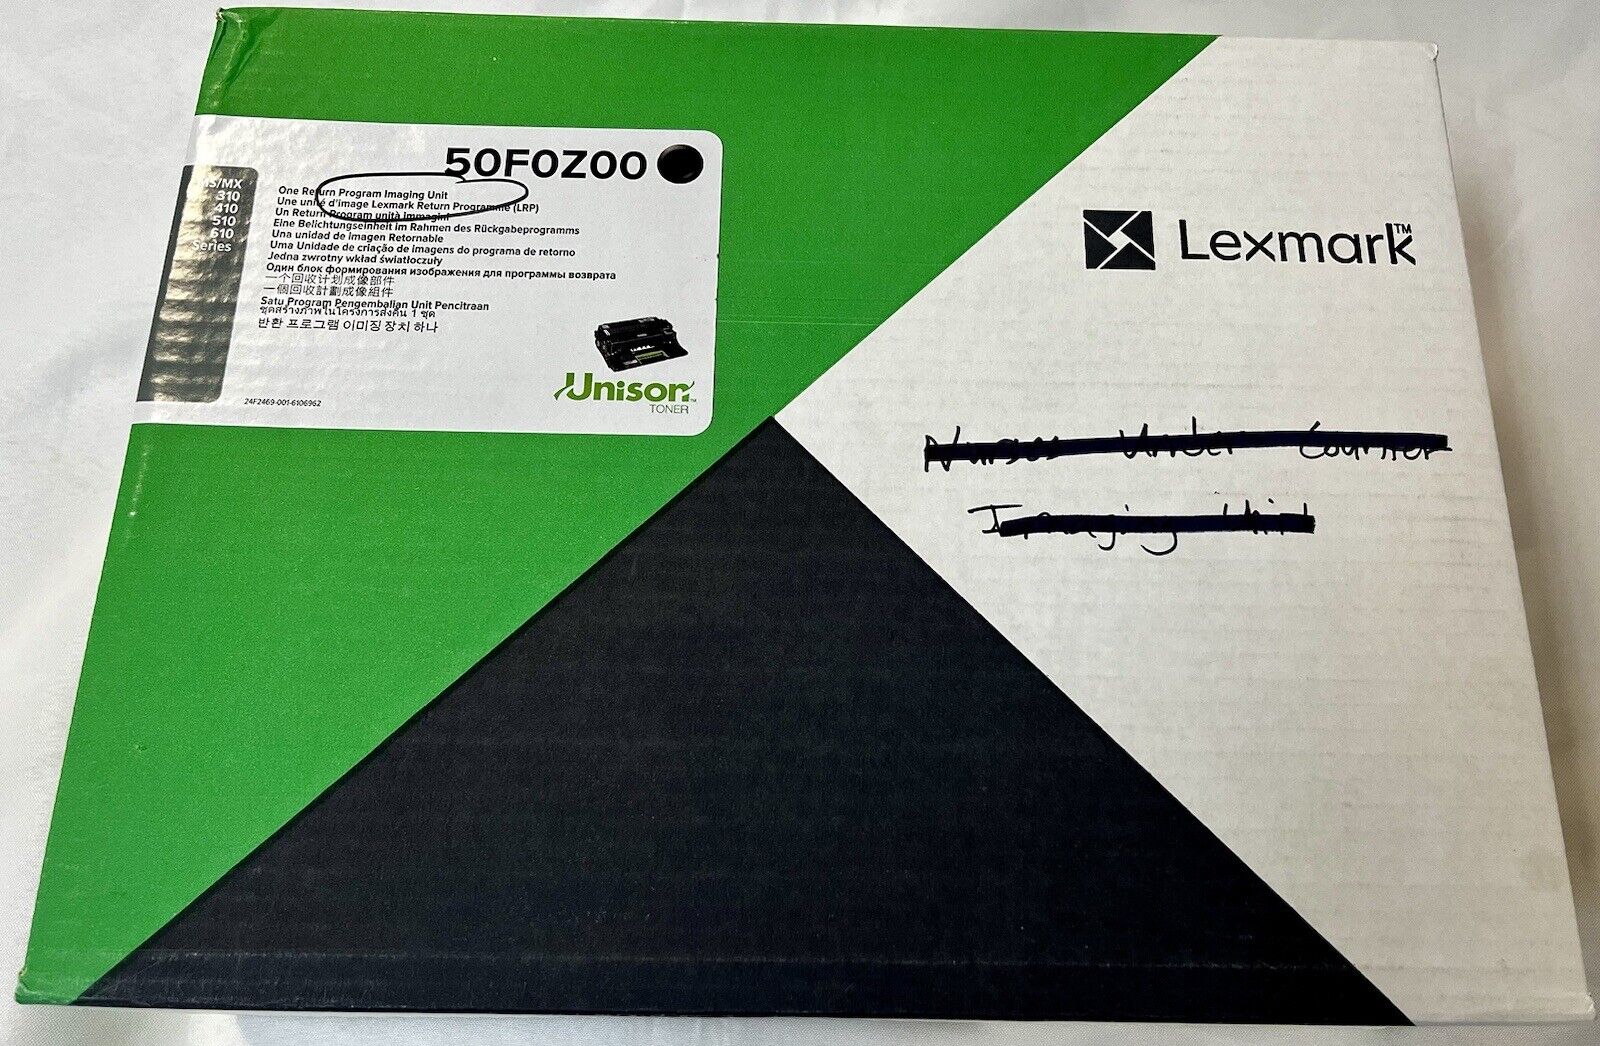 Genuine Lexmark 50F0Z00 Imaging Unit MS/MX 310 410 510 610 Series Unison Toner